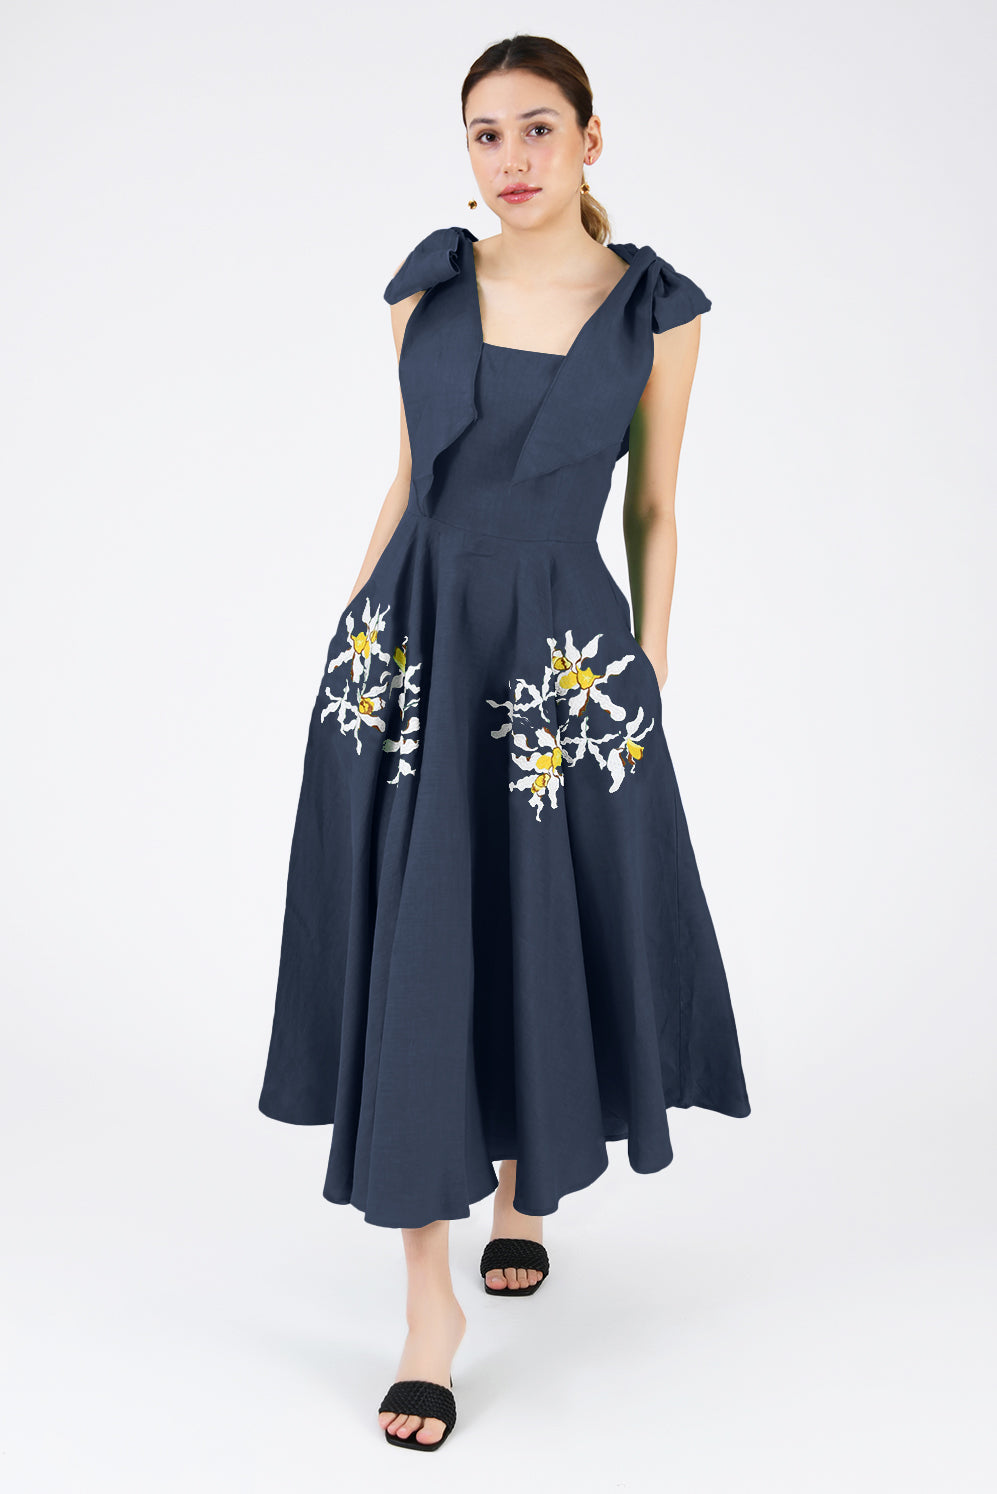 Nilen Dress (Wanga Collection) in Indigo Blue